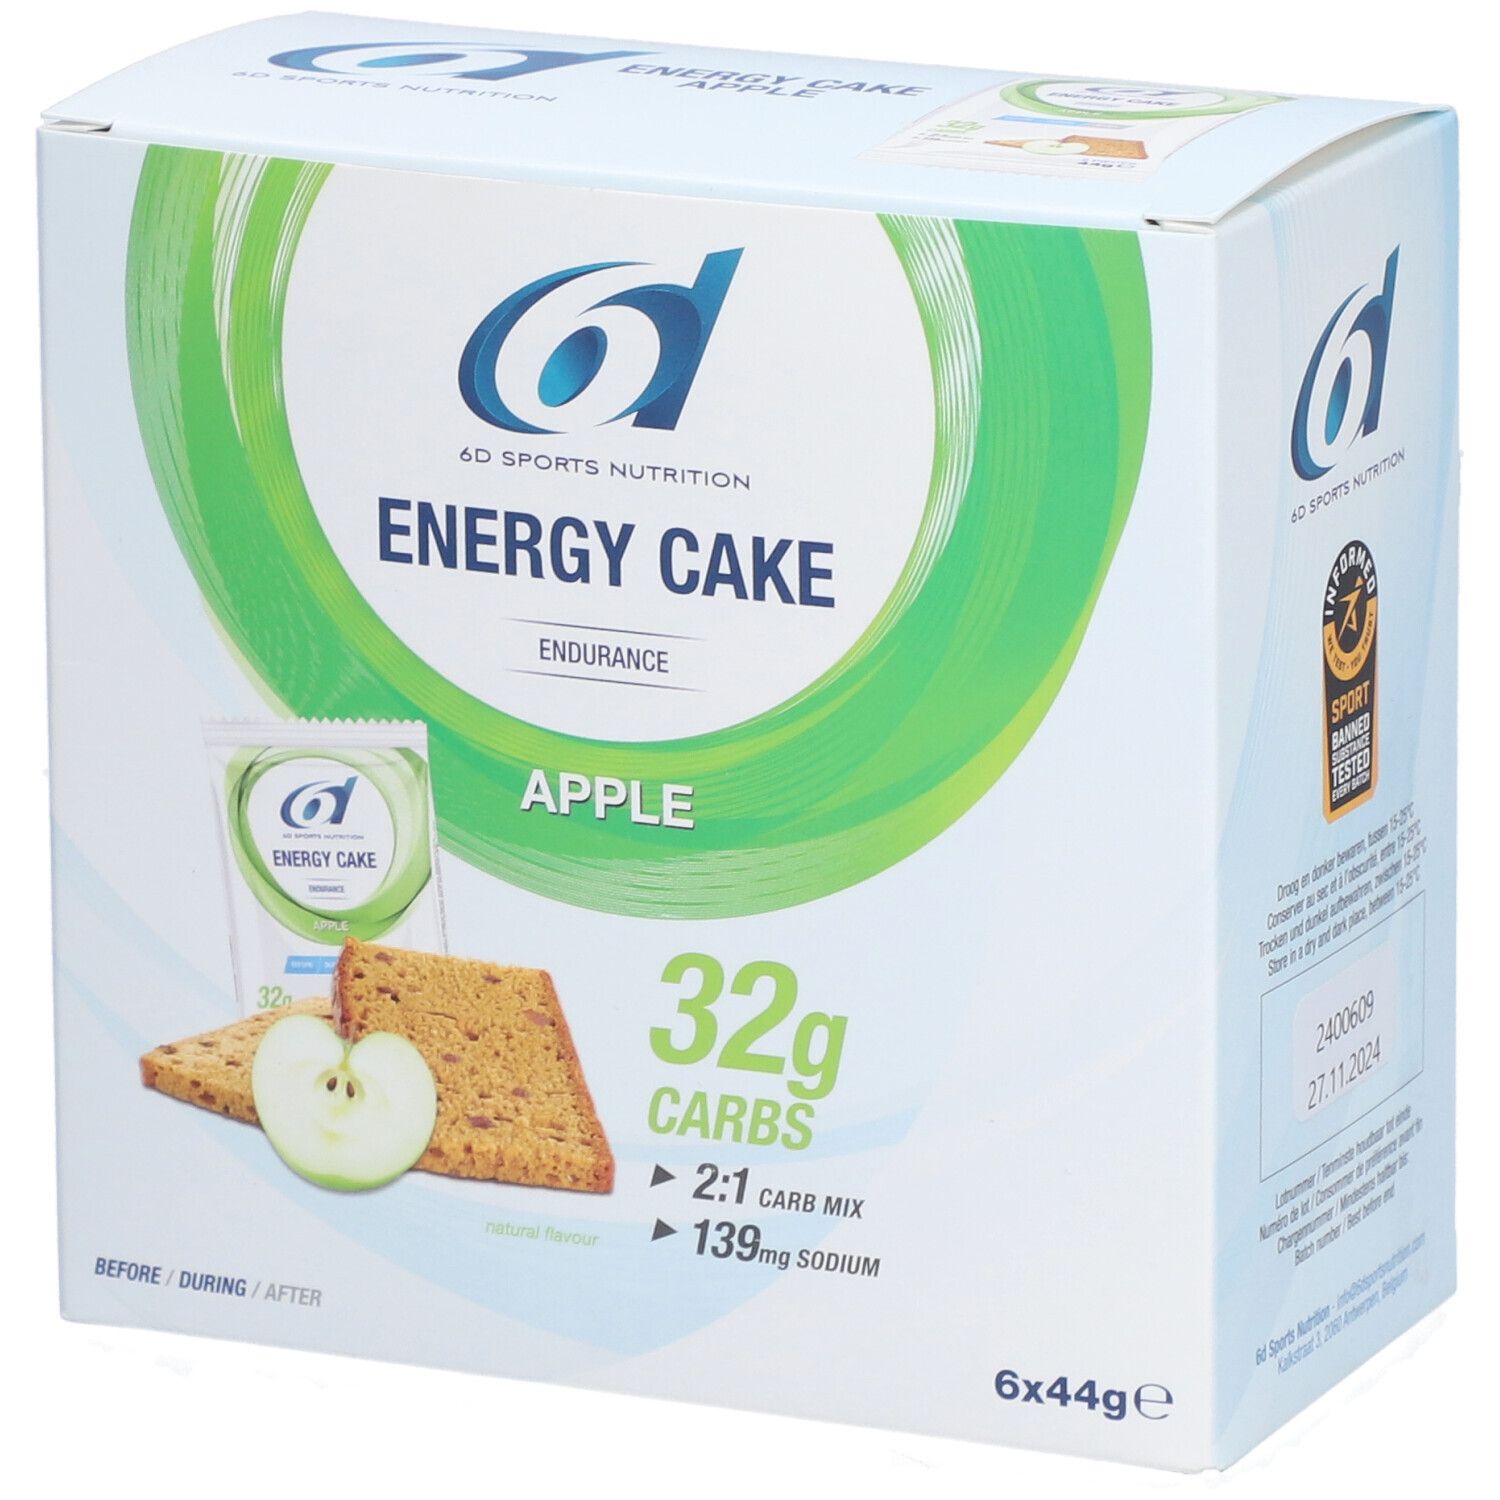 6D Sports Nutrition Energy Cake Apfel